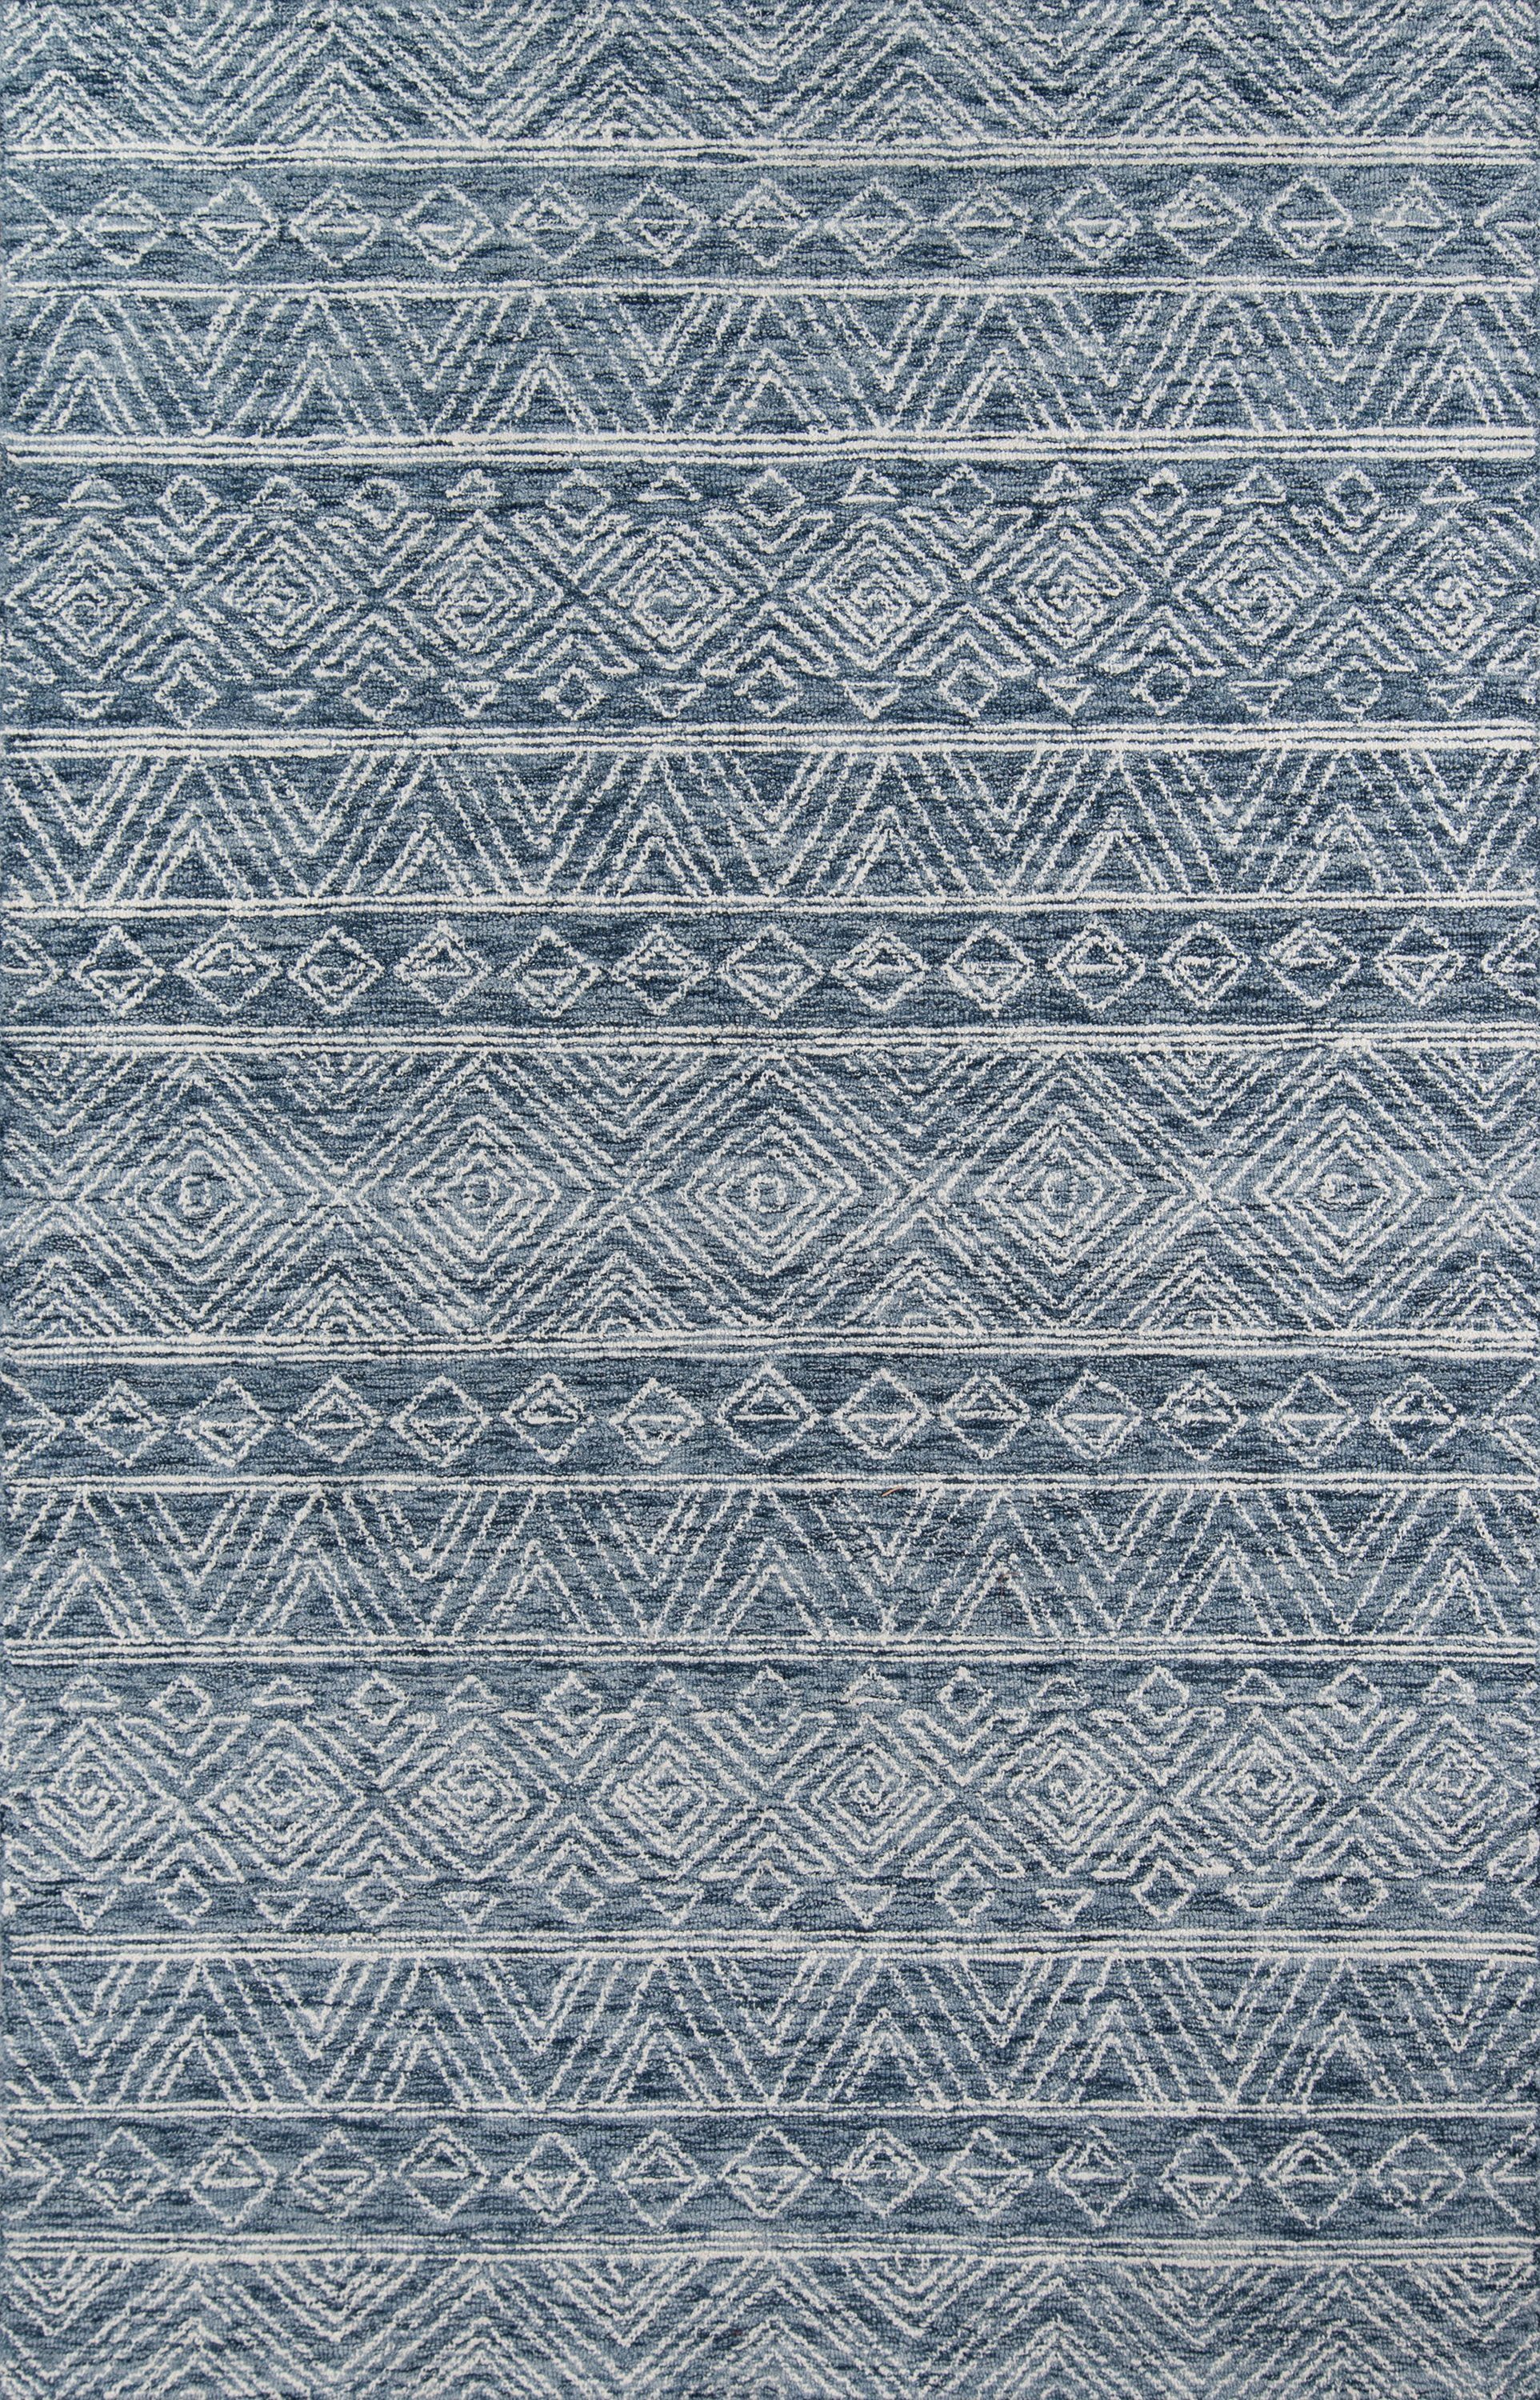 Handcrafted Gray Geometric Wool Area Rug, 8' x 10'